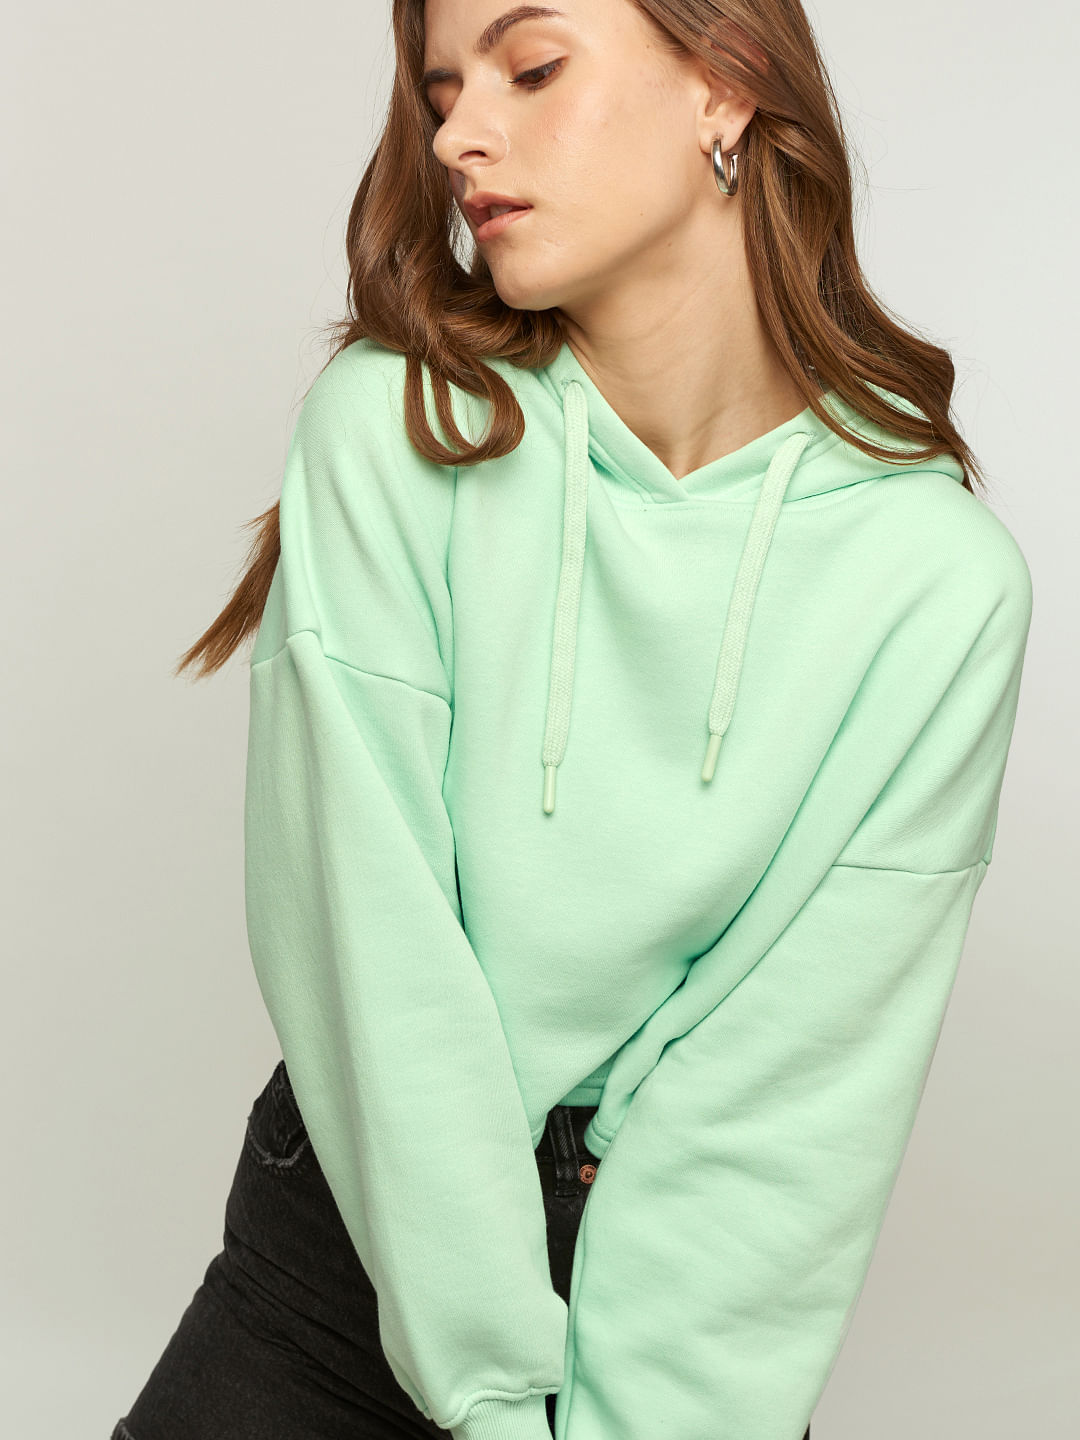 Buy Official TSS Originals: Mint Green Women Cropped Oversized Hoodies ...